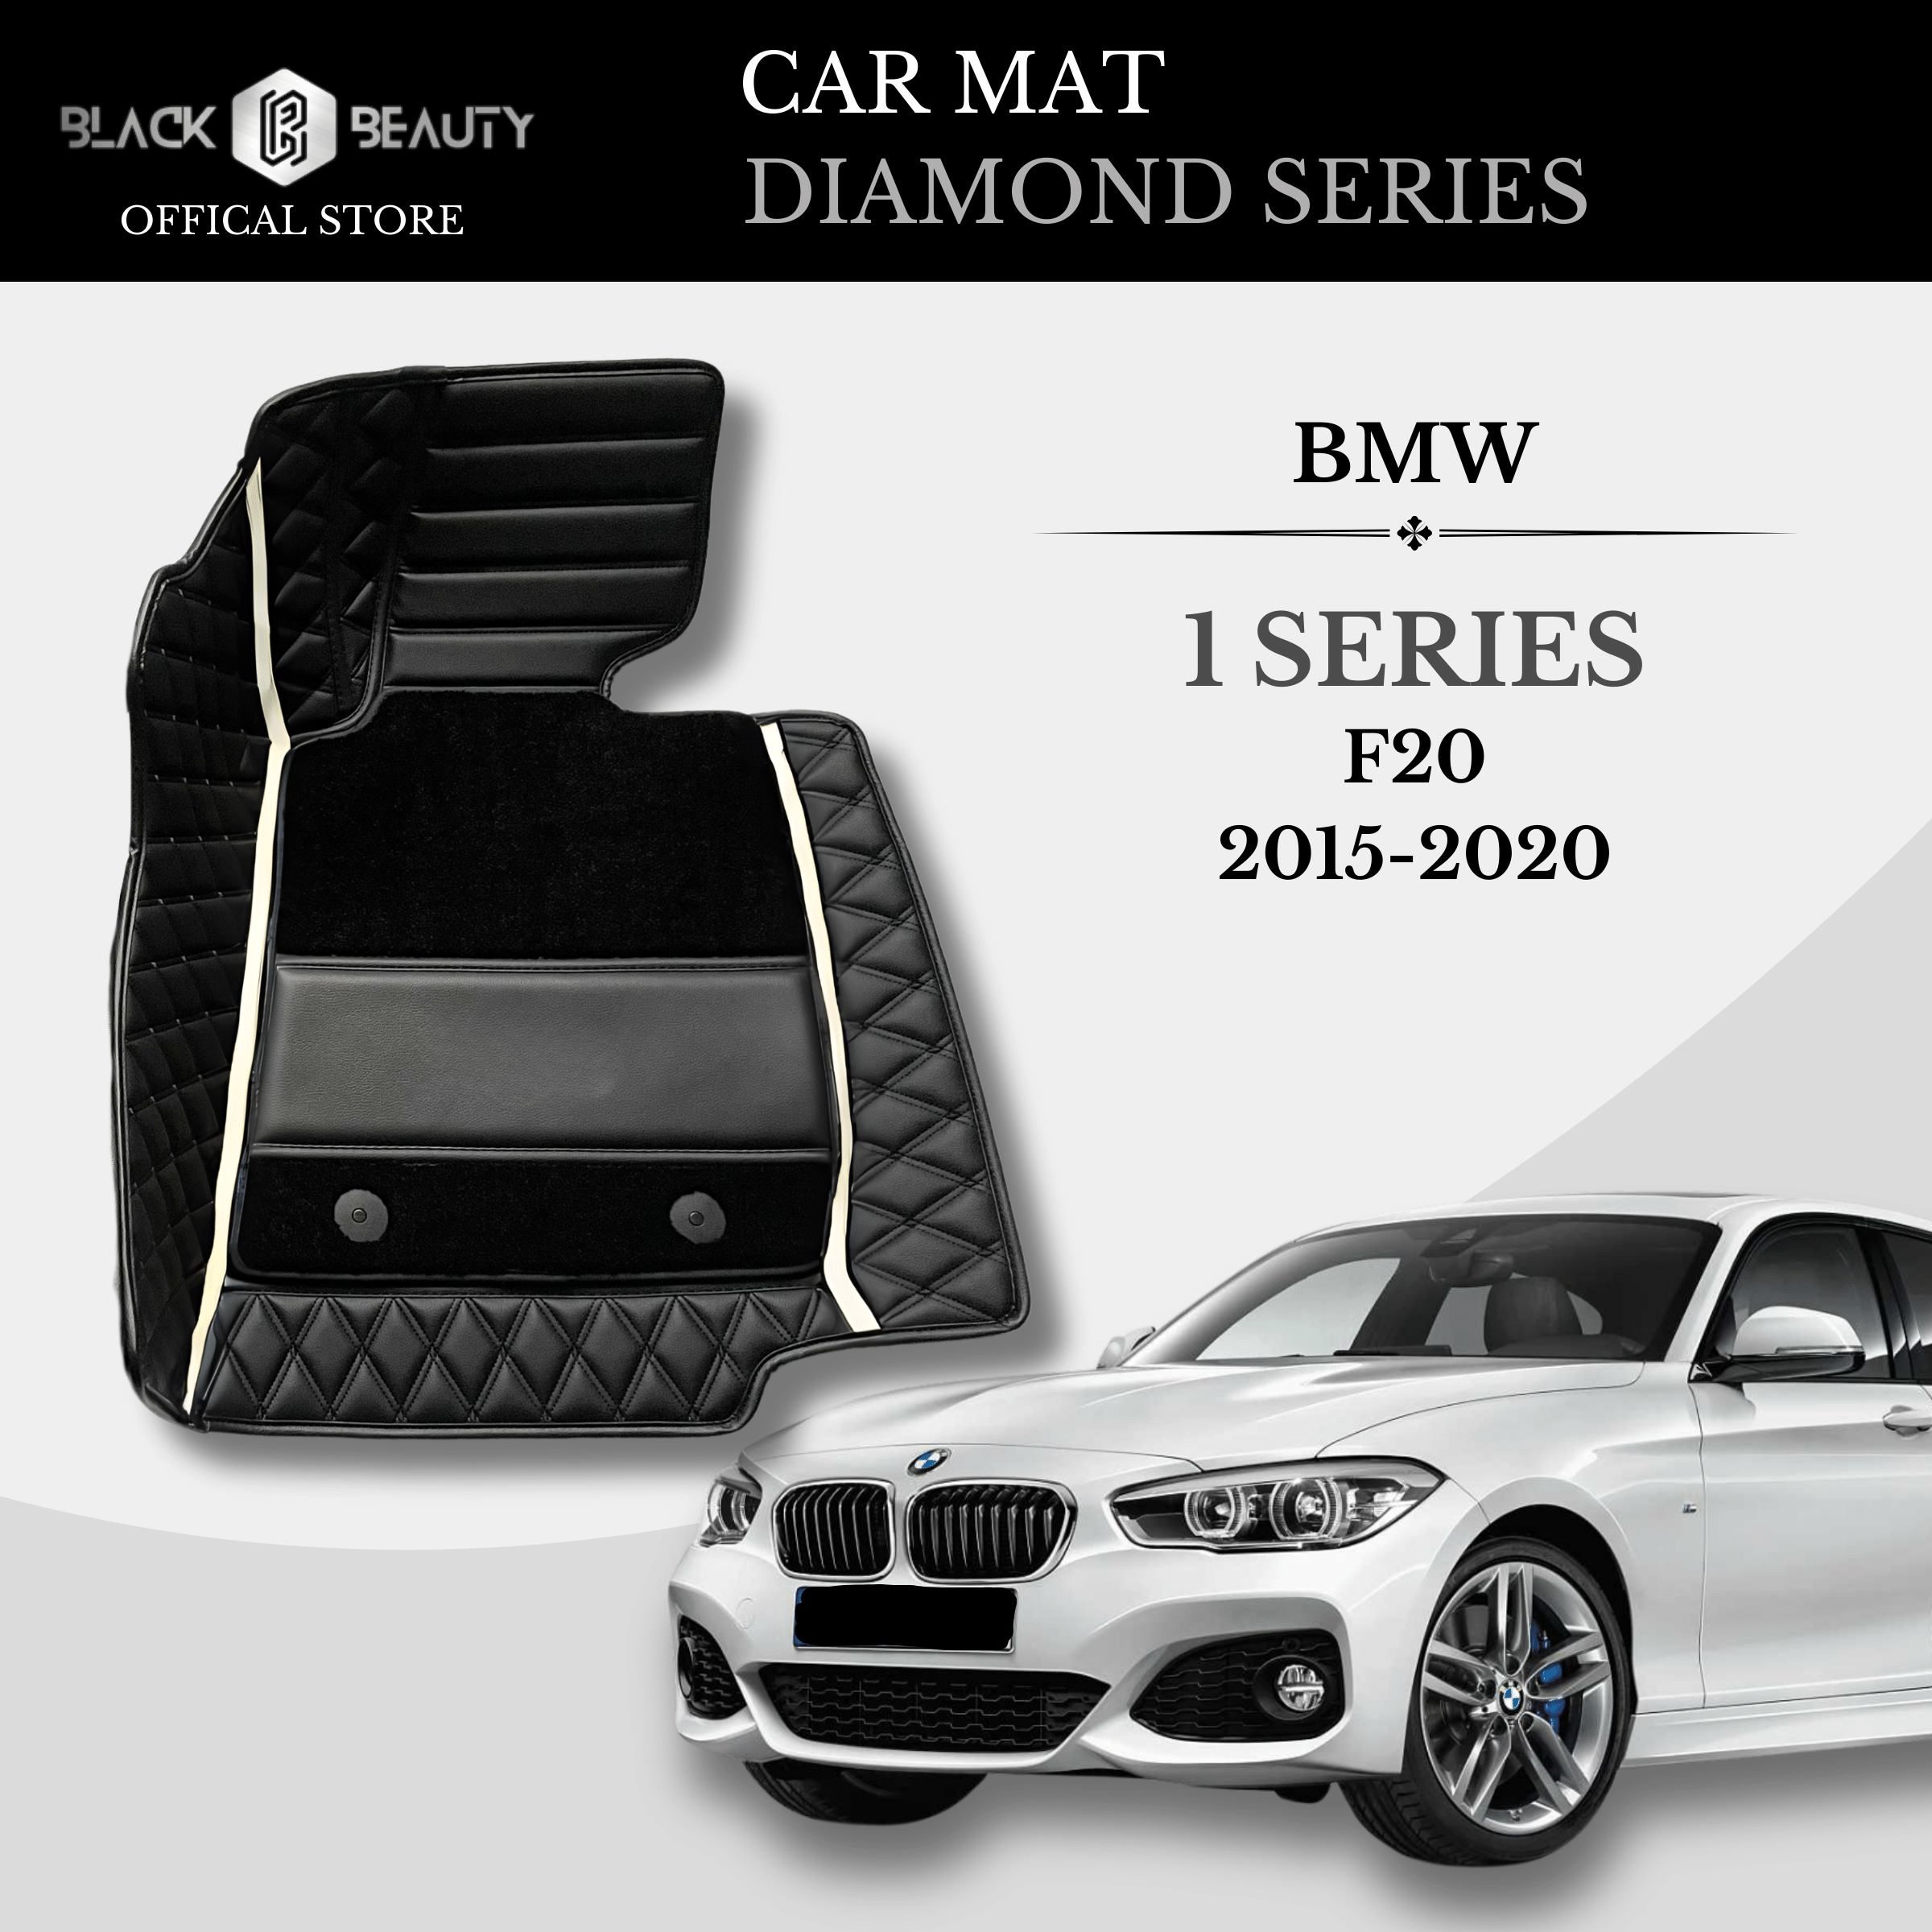 BMW 1 Series F20 (2015-2020) - Diamond Series Car Mat